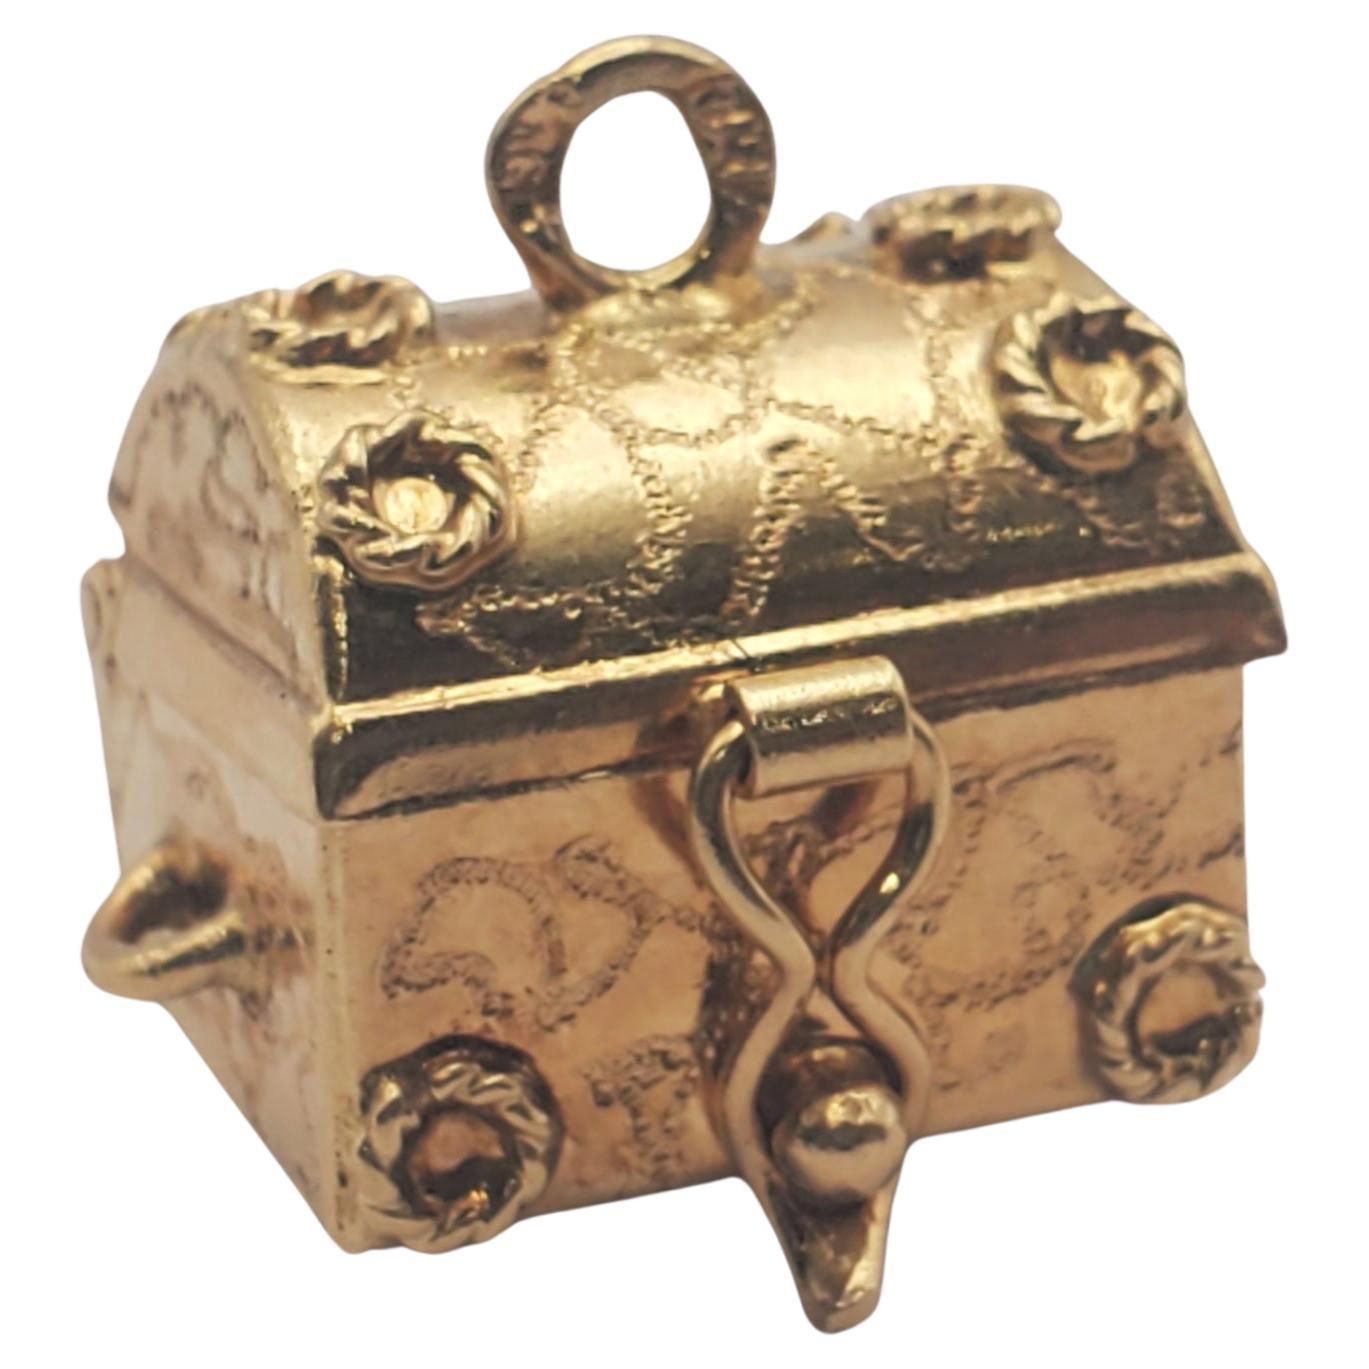 18Y Ornate Treasure Chest Charm/Pendant with Hidden Pearl Treasure